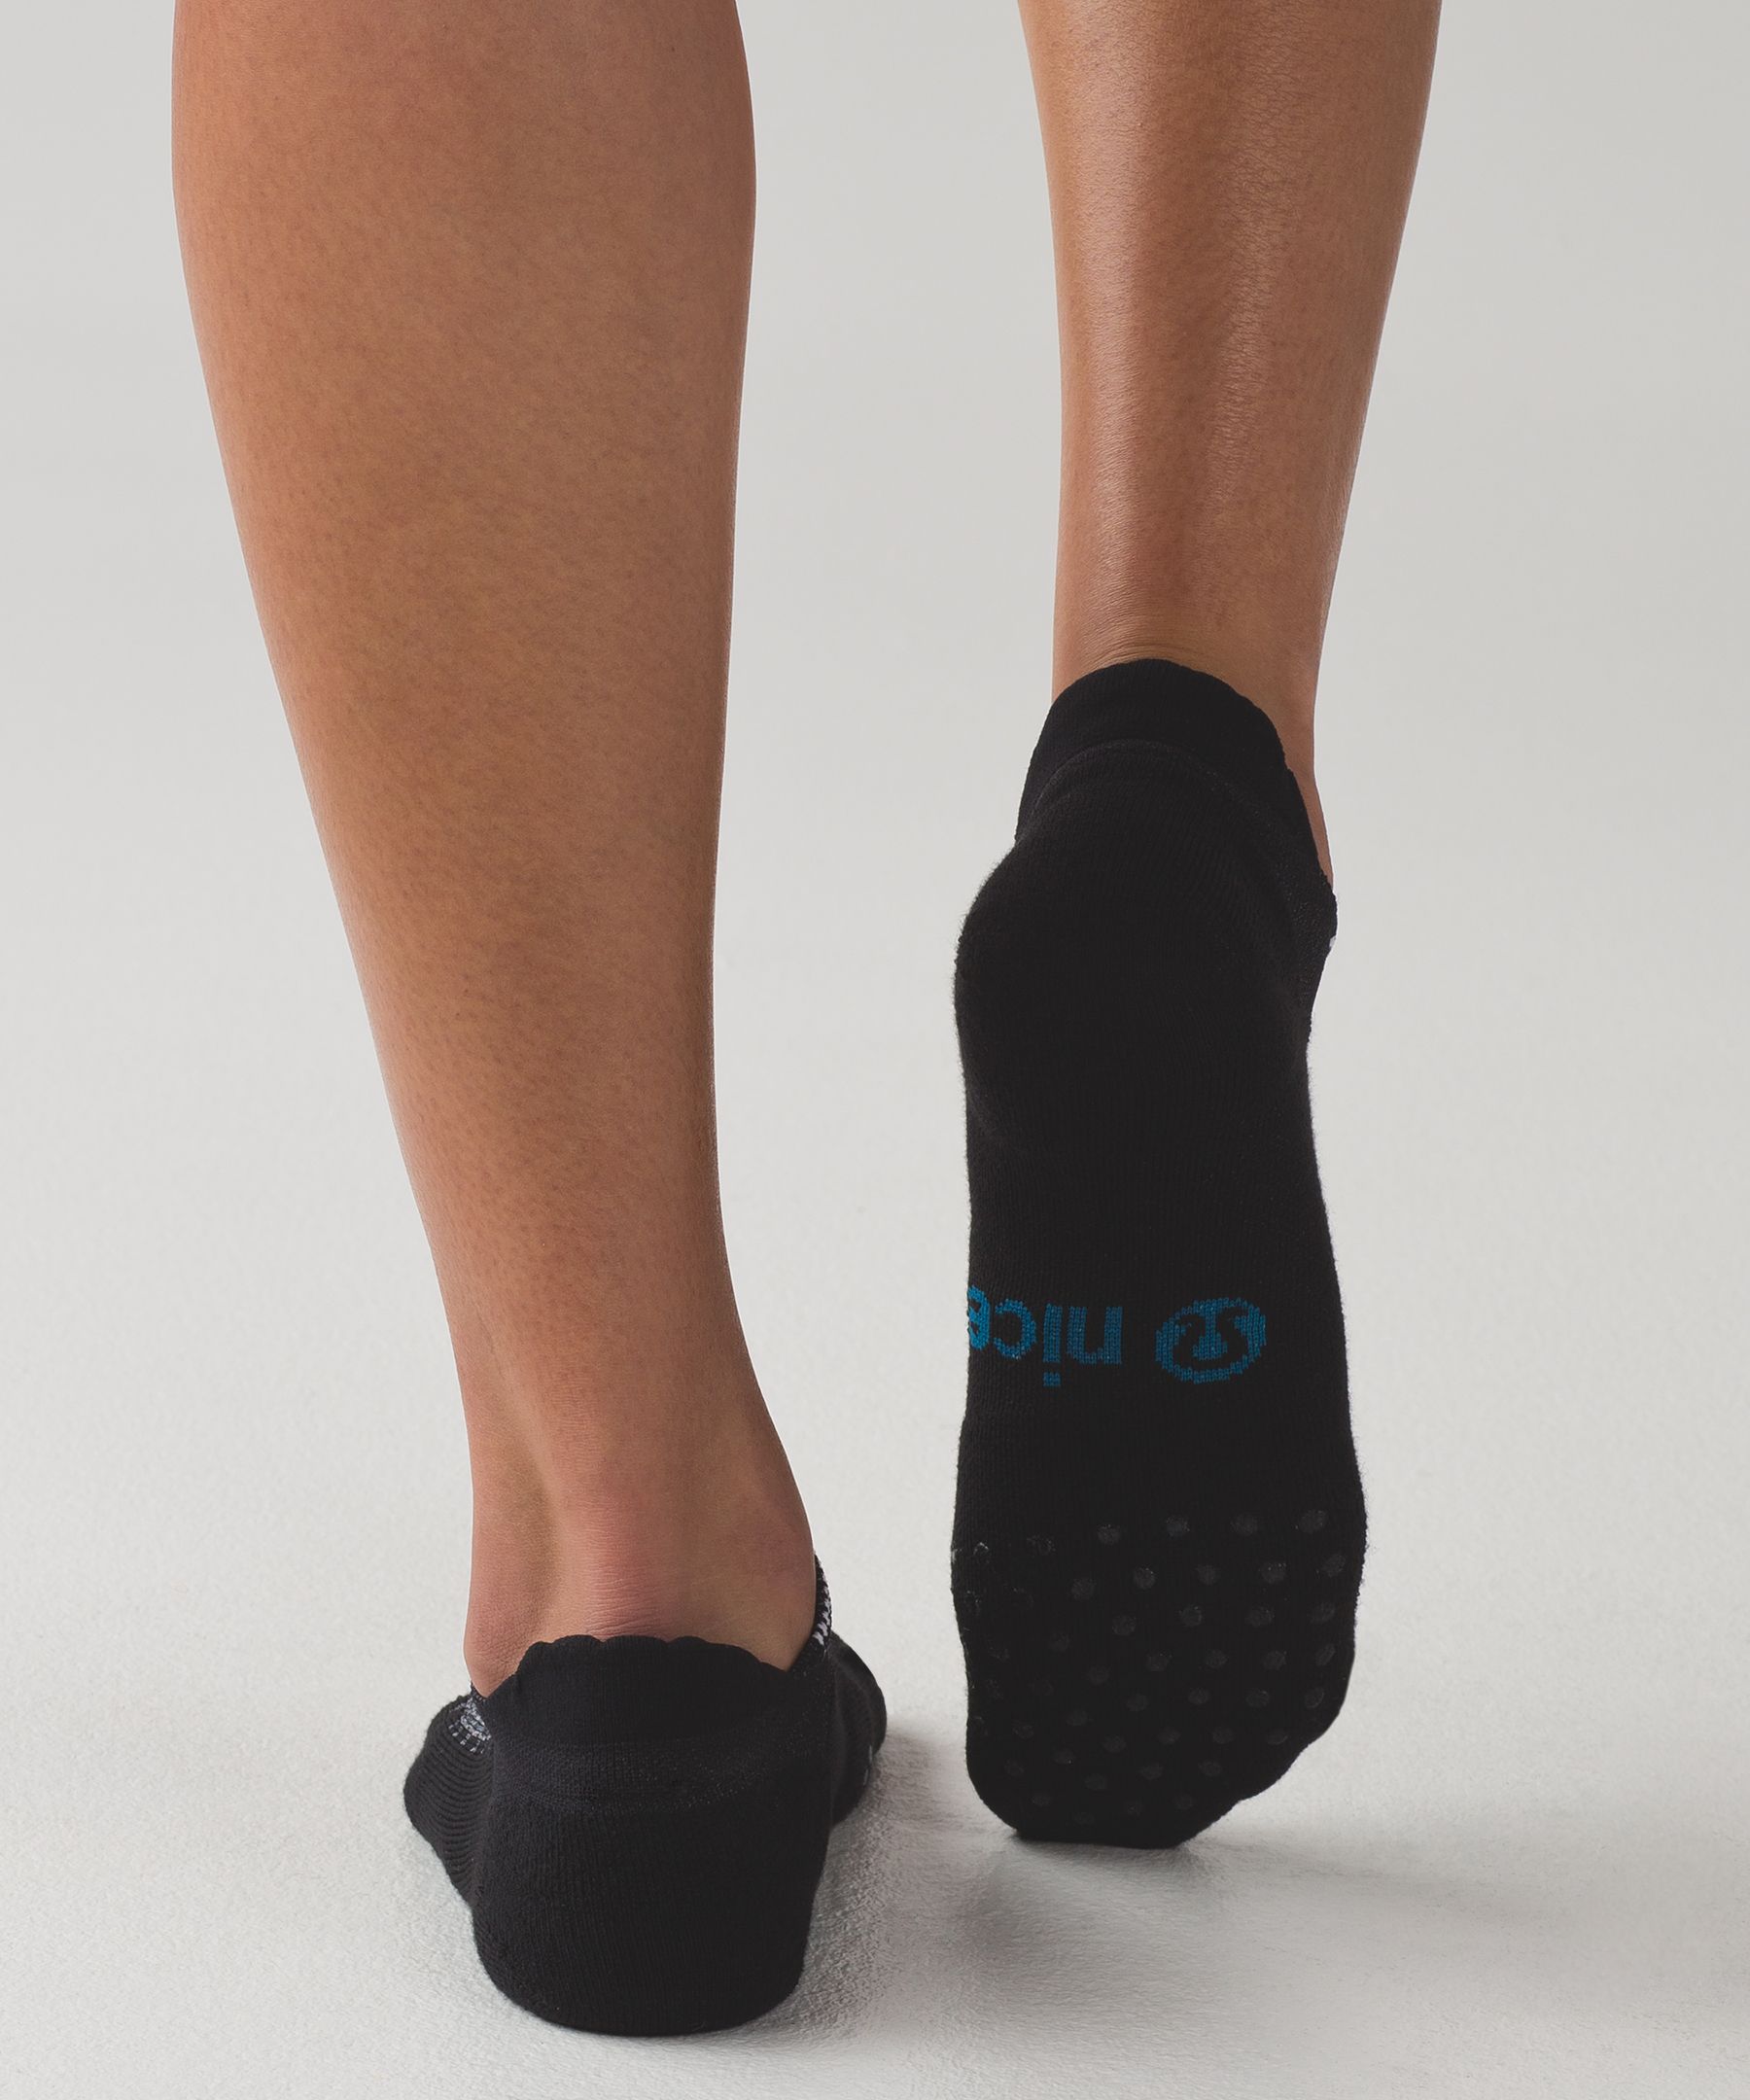 Heels High Studio Sock | Women's Socks & Underwear | lululemon athletica